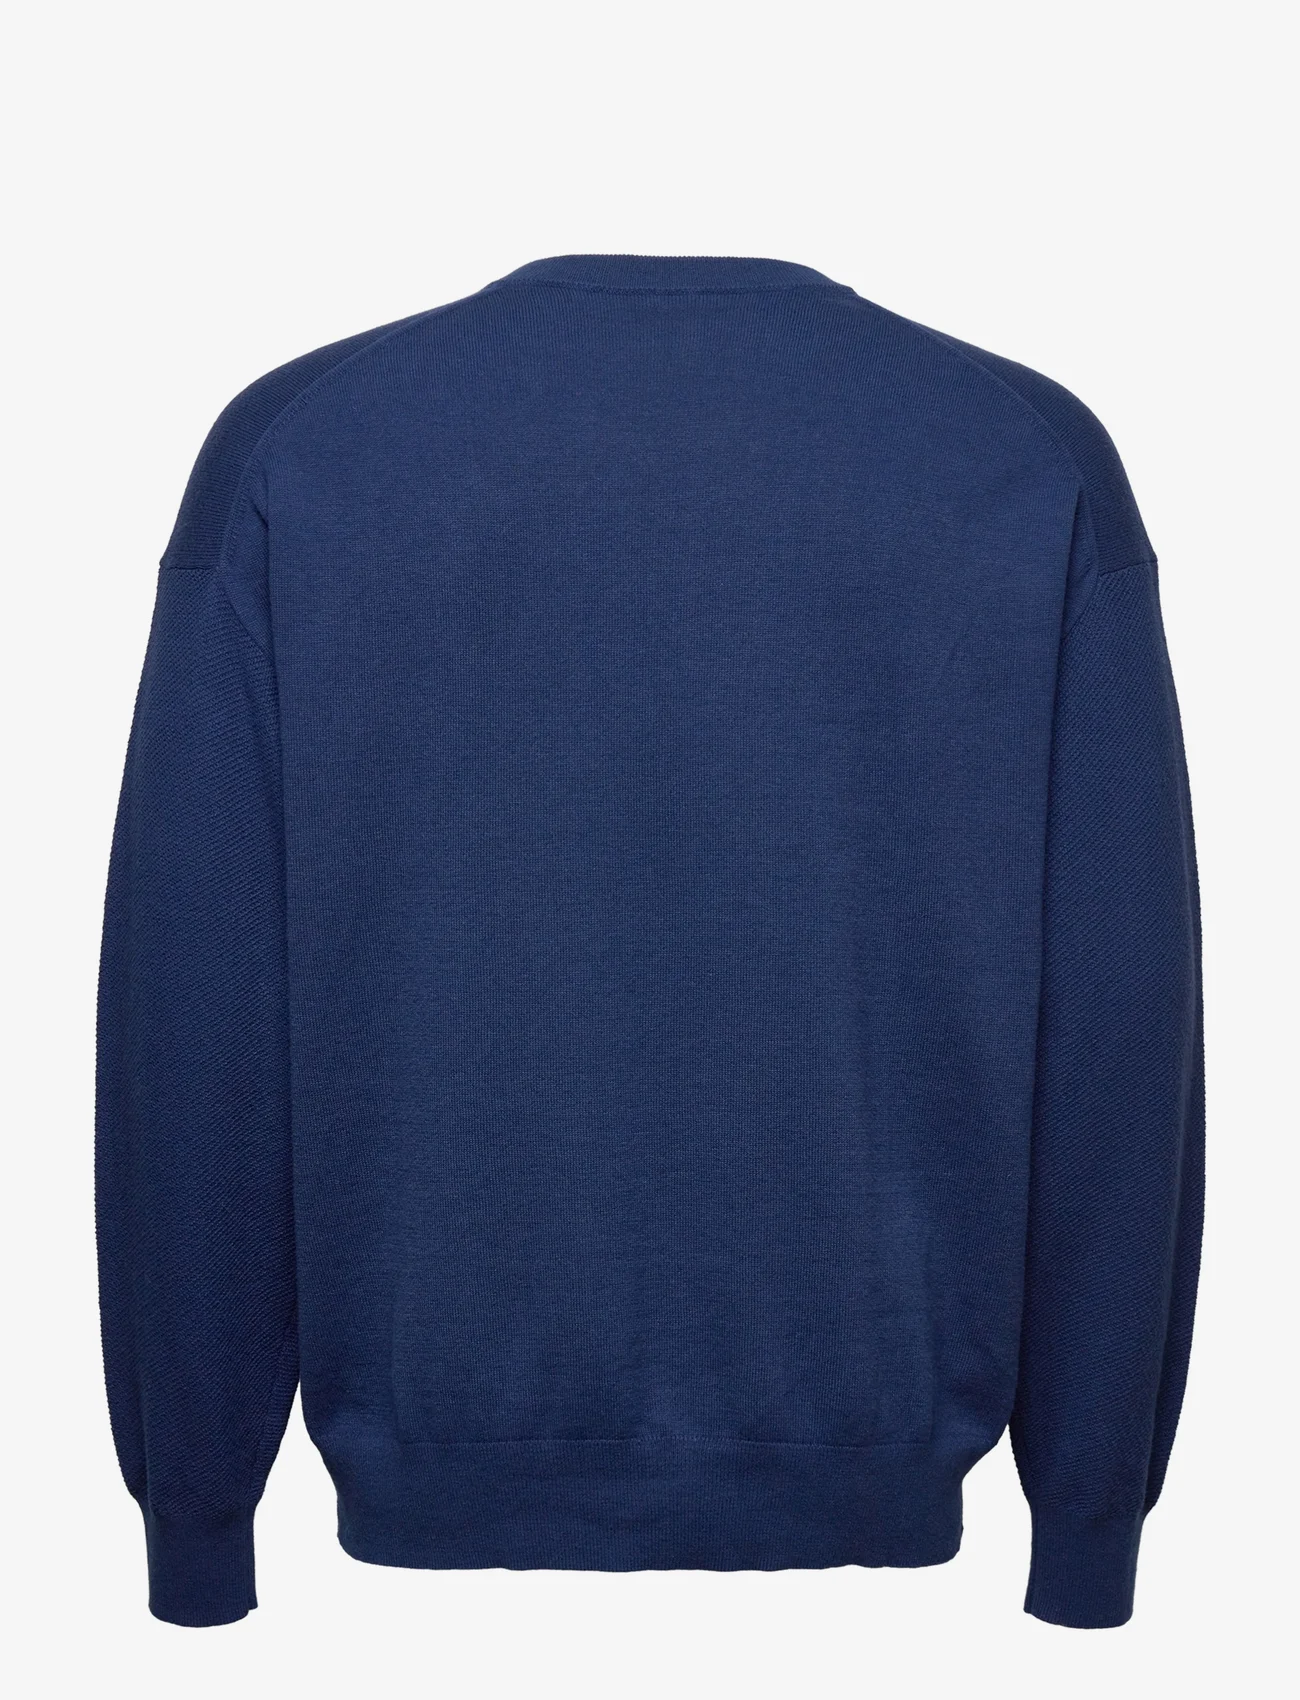 Filippa K - M. Axel Sweater - basic knitwear - royal blue - 1